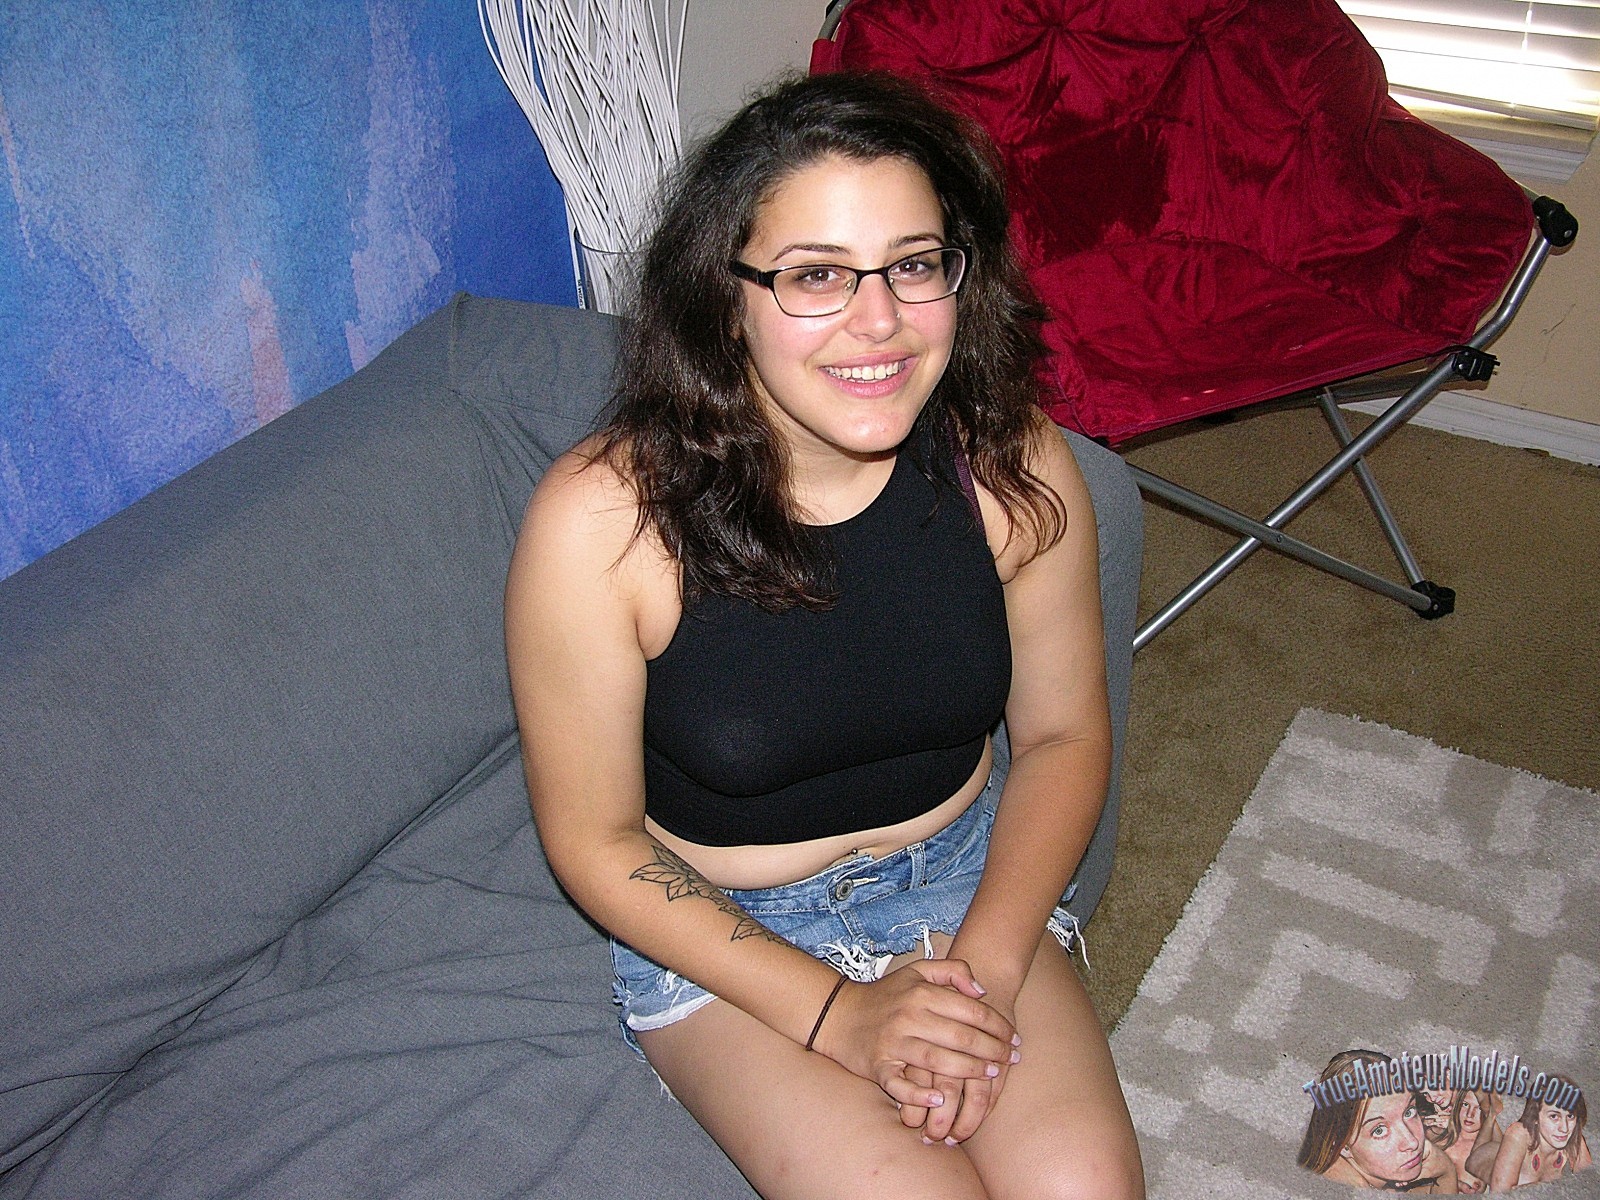 xpics - sex in glasses Glasses wearing amateur brunette teen models nude  photo